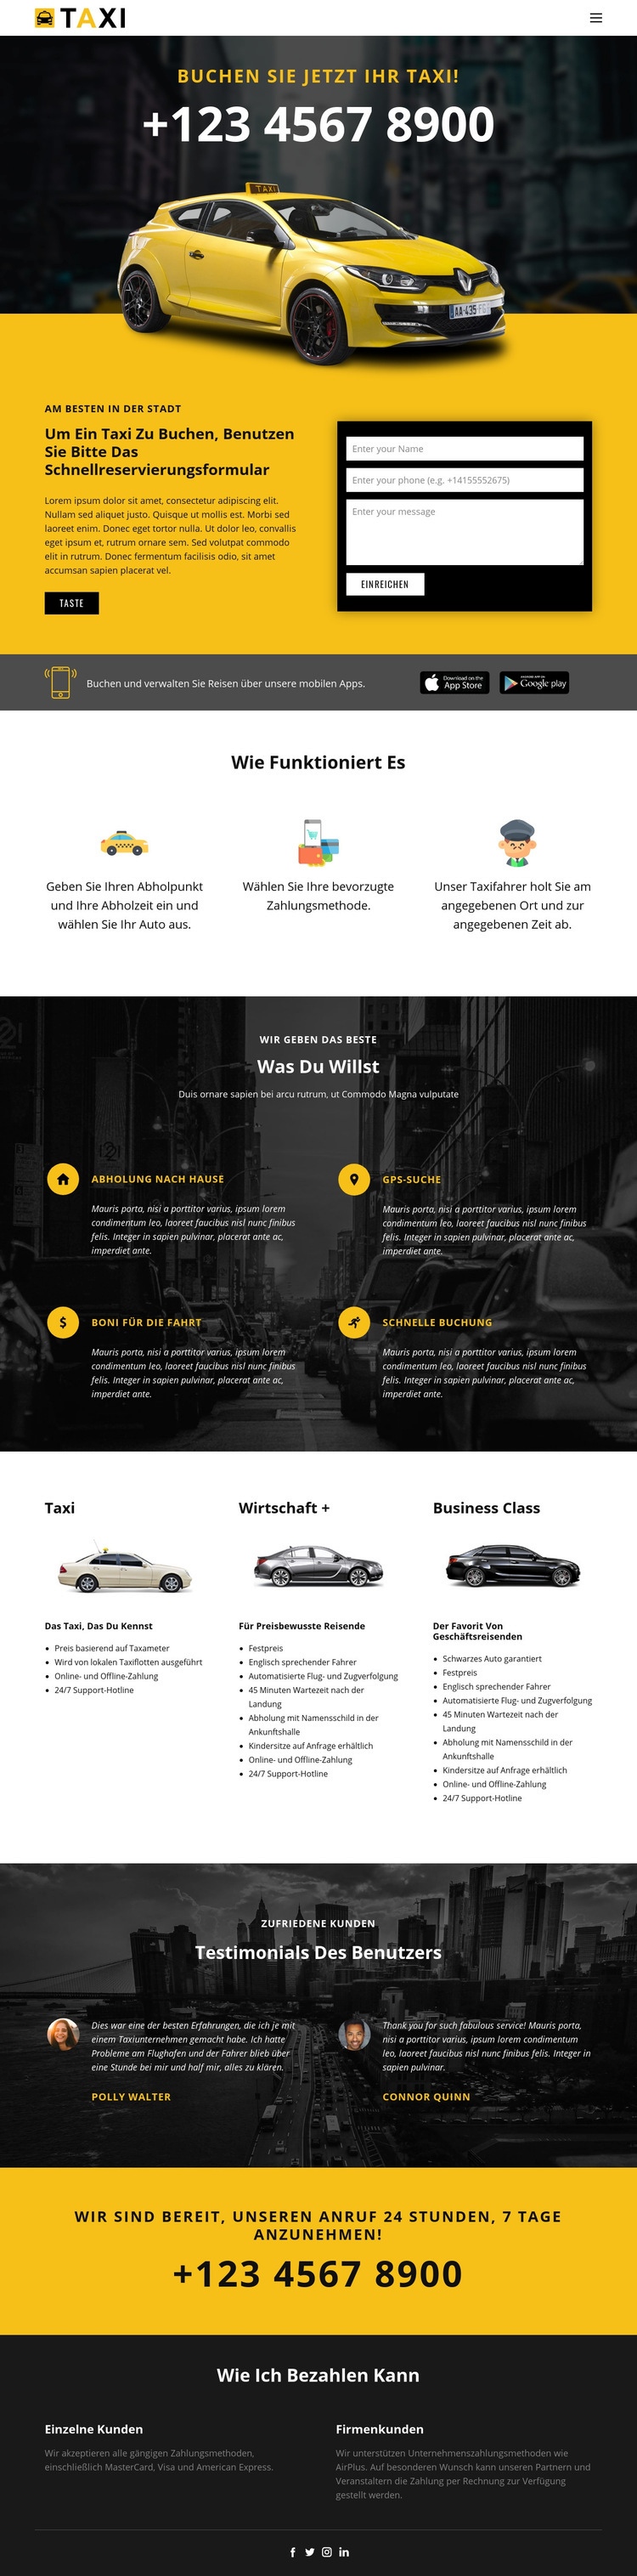 Schnellste Taxis Website-Modell